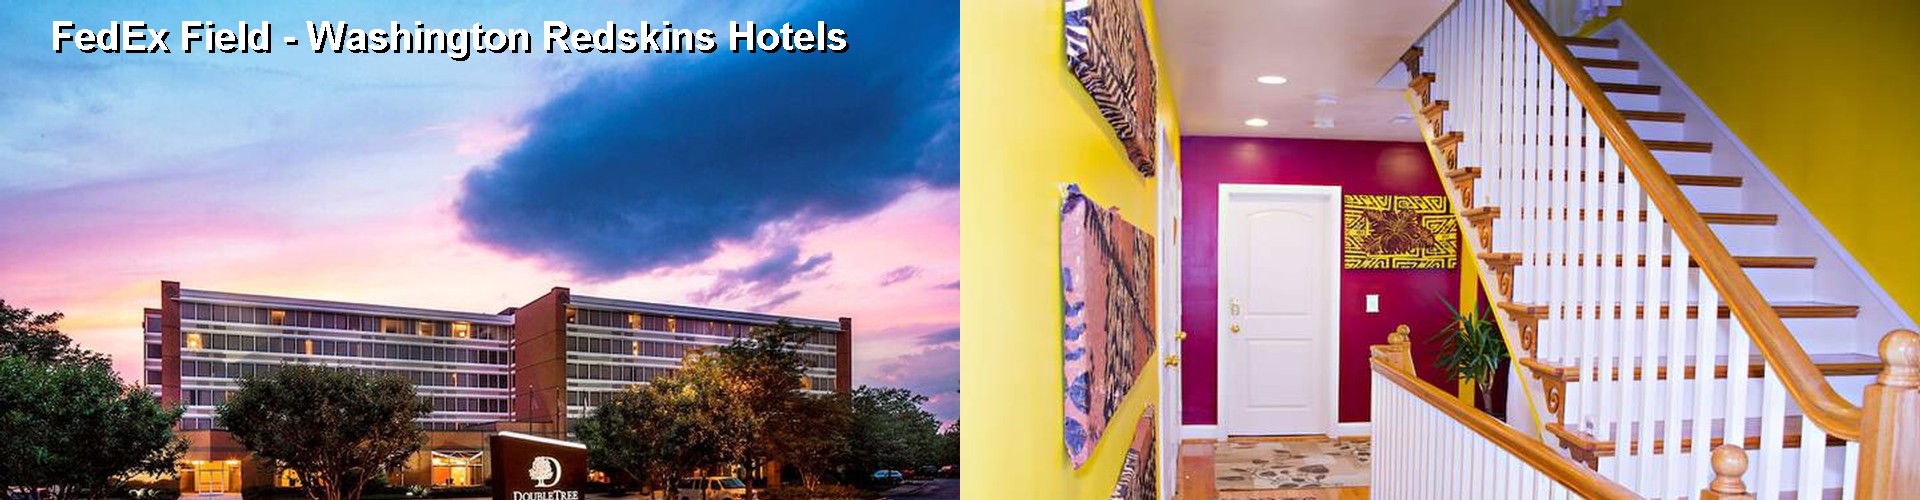 5 Best Hotels near FedEx Field - Washington Redskins